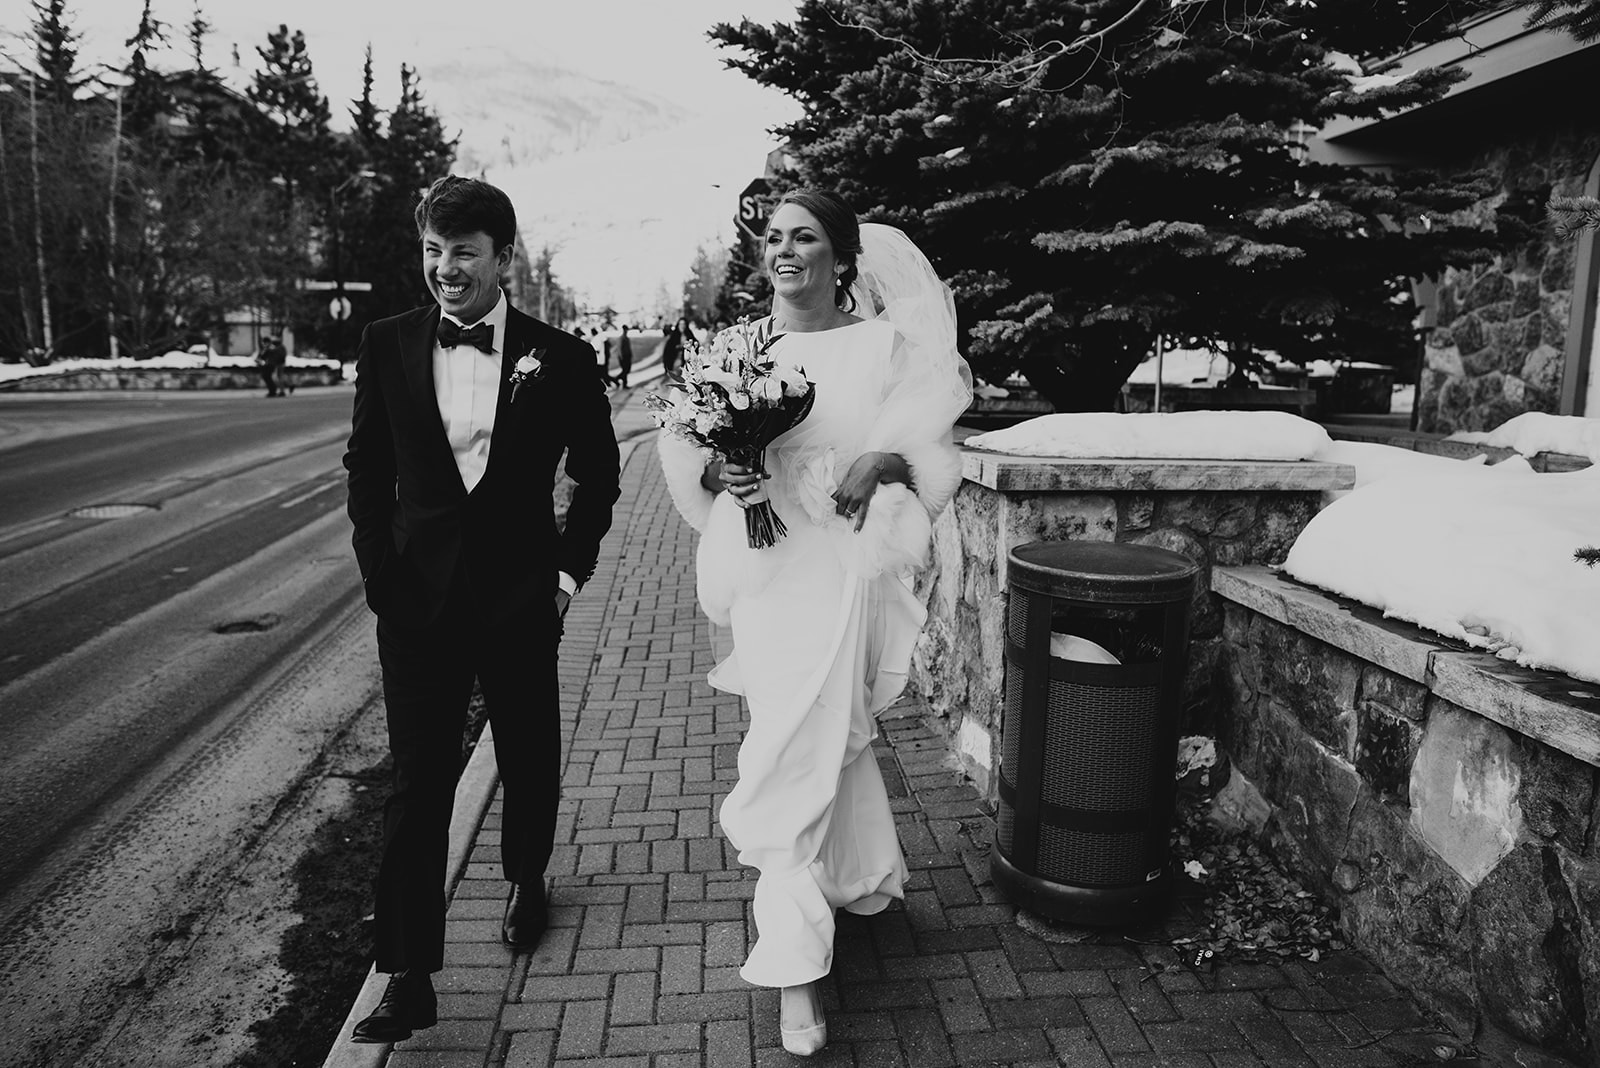 A couple that got married in Vail Colorado walks through vail village in their wedding attire